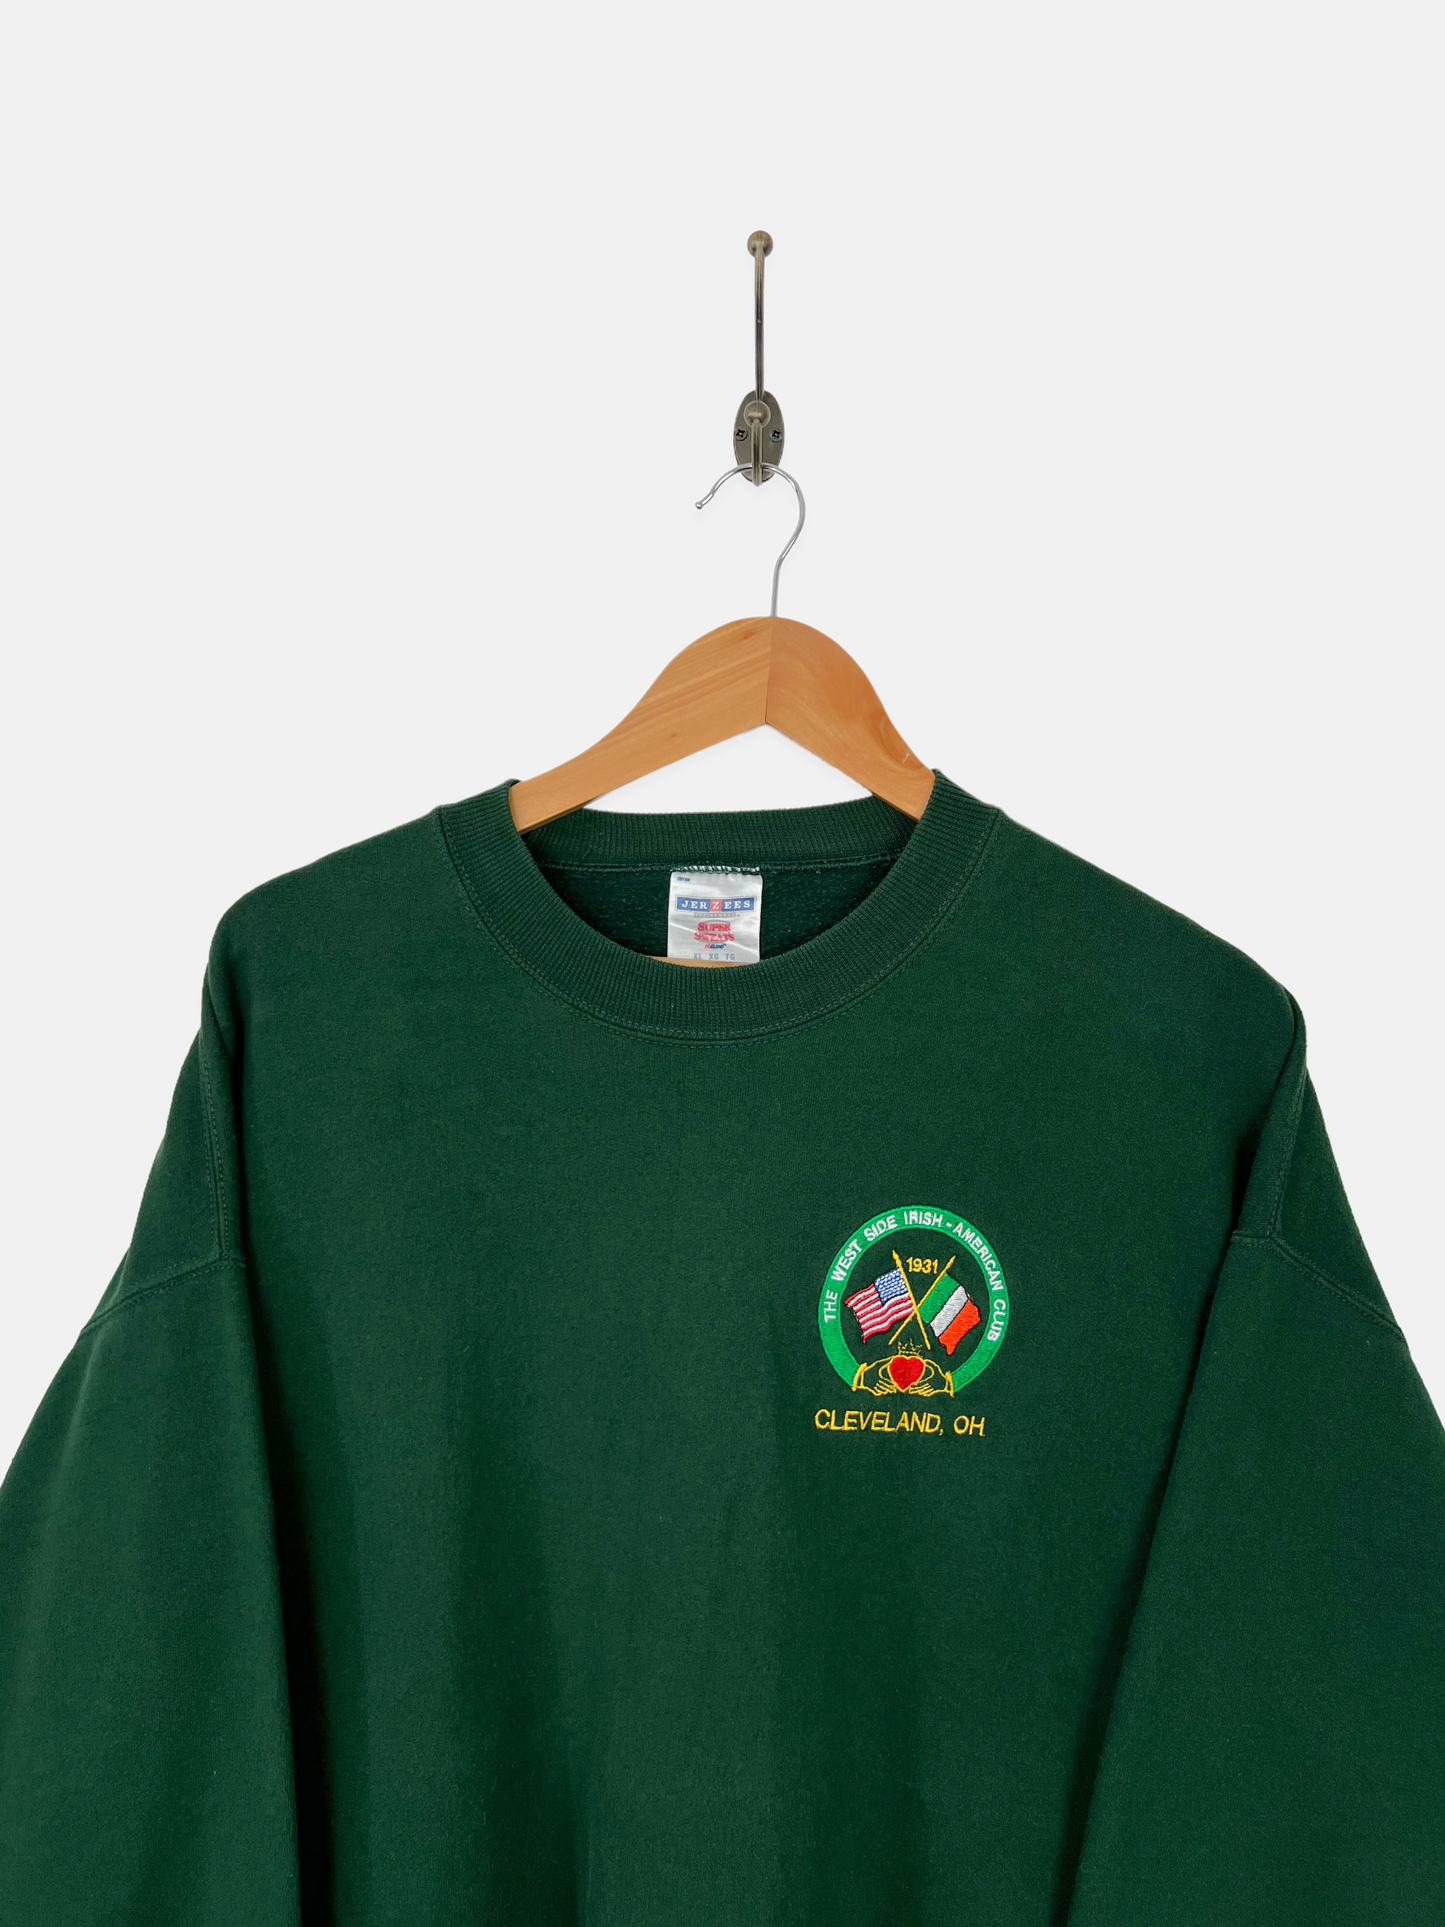 90's Cleveland Ohio Embroidered Vintage Sweatshirt Size XL